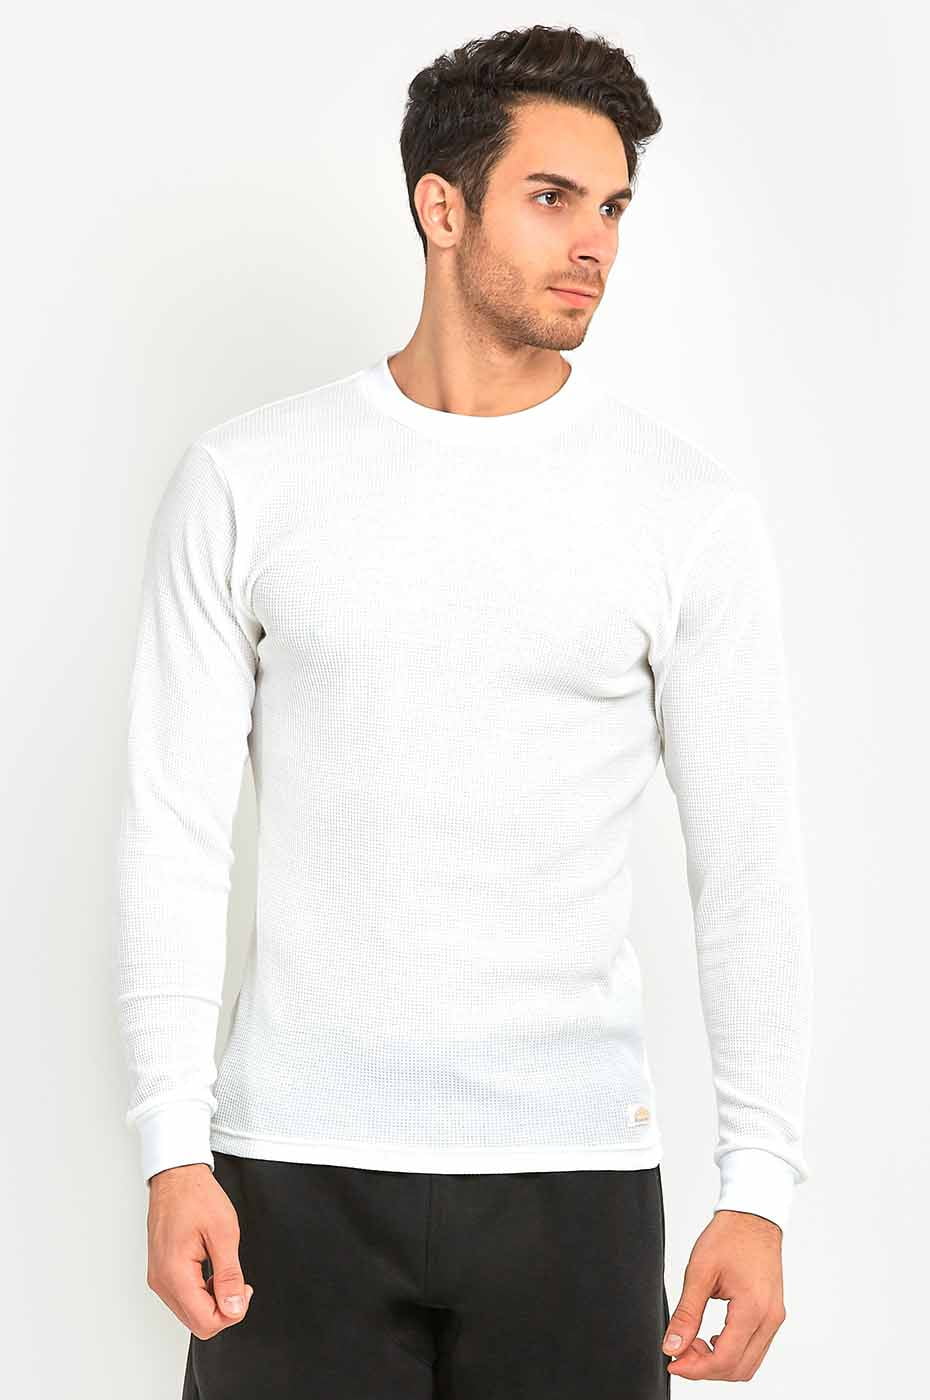 Men's Long Sleeve Thermal Shirt Medium Weight Warm Waffle Knit